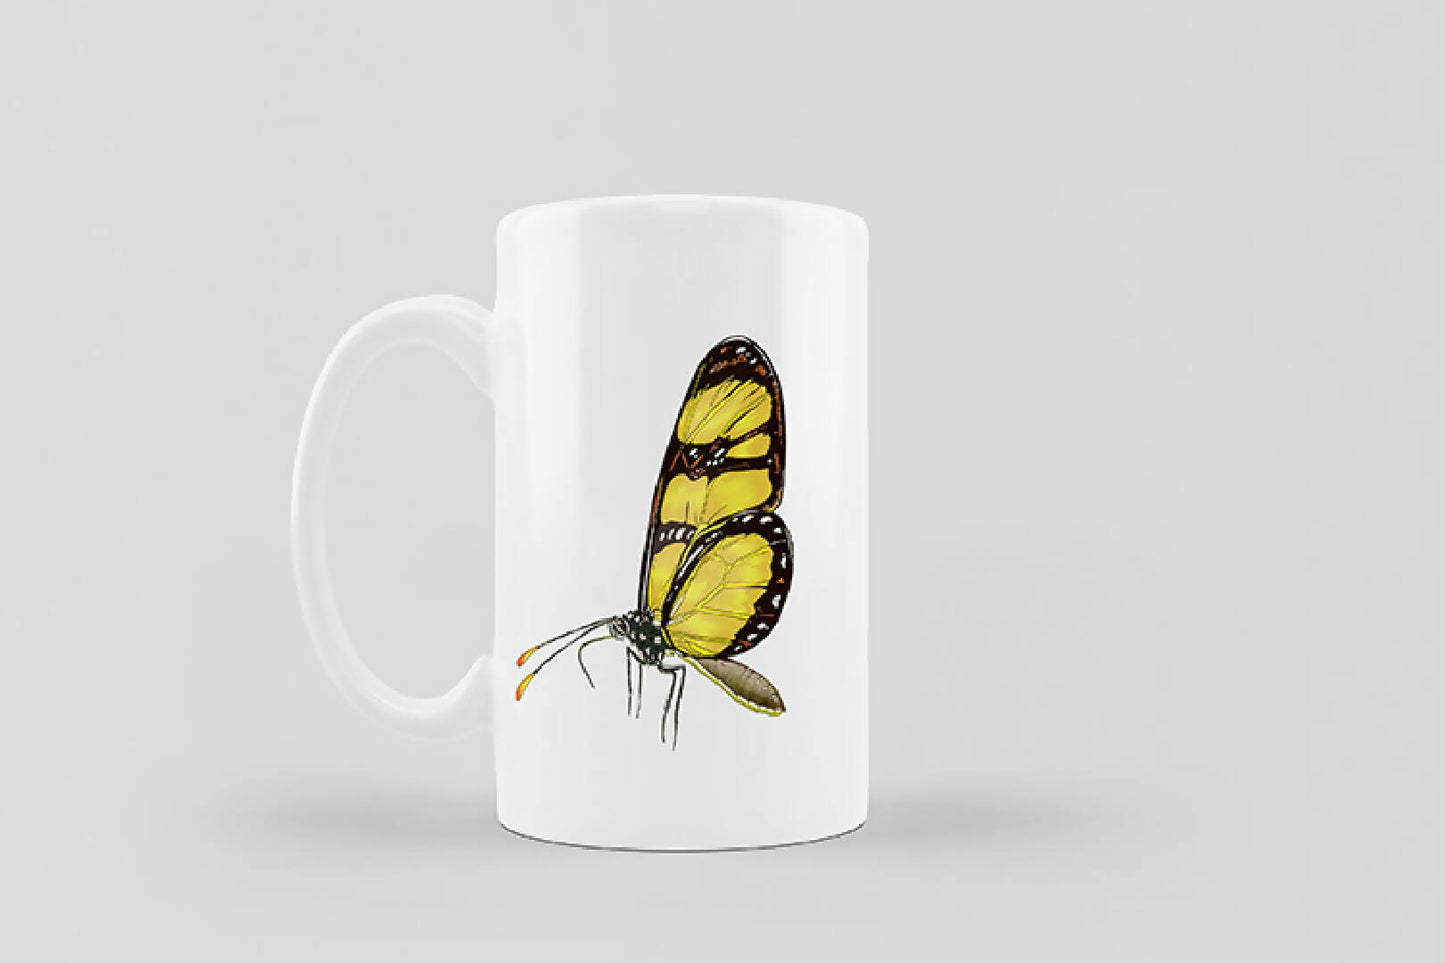 Butterflies clipart watercolor